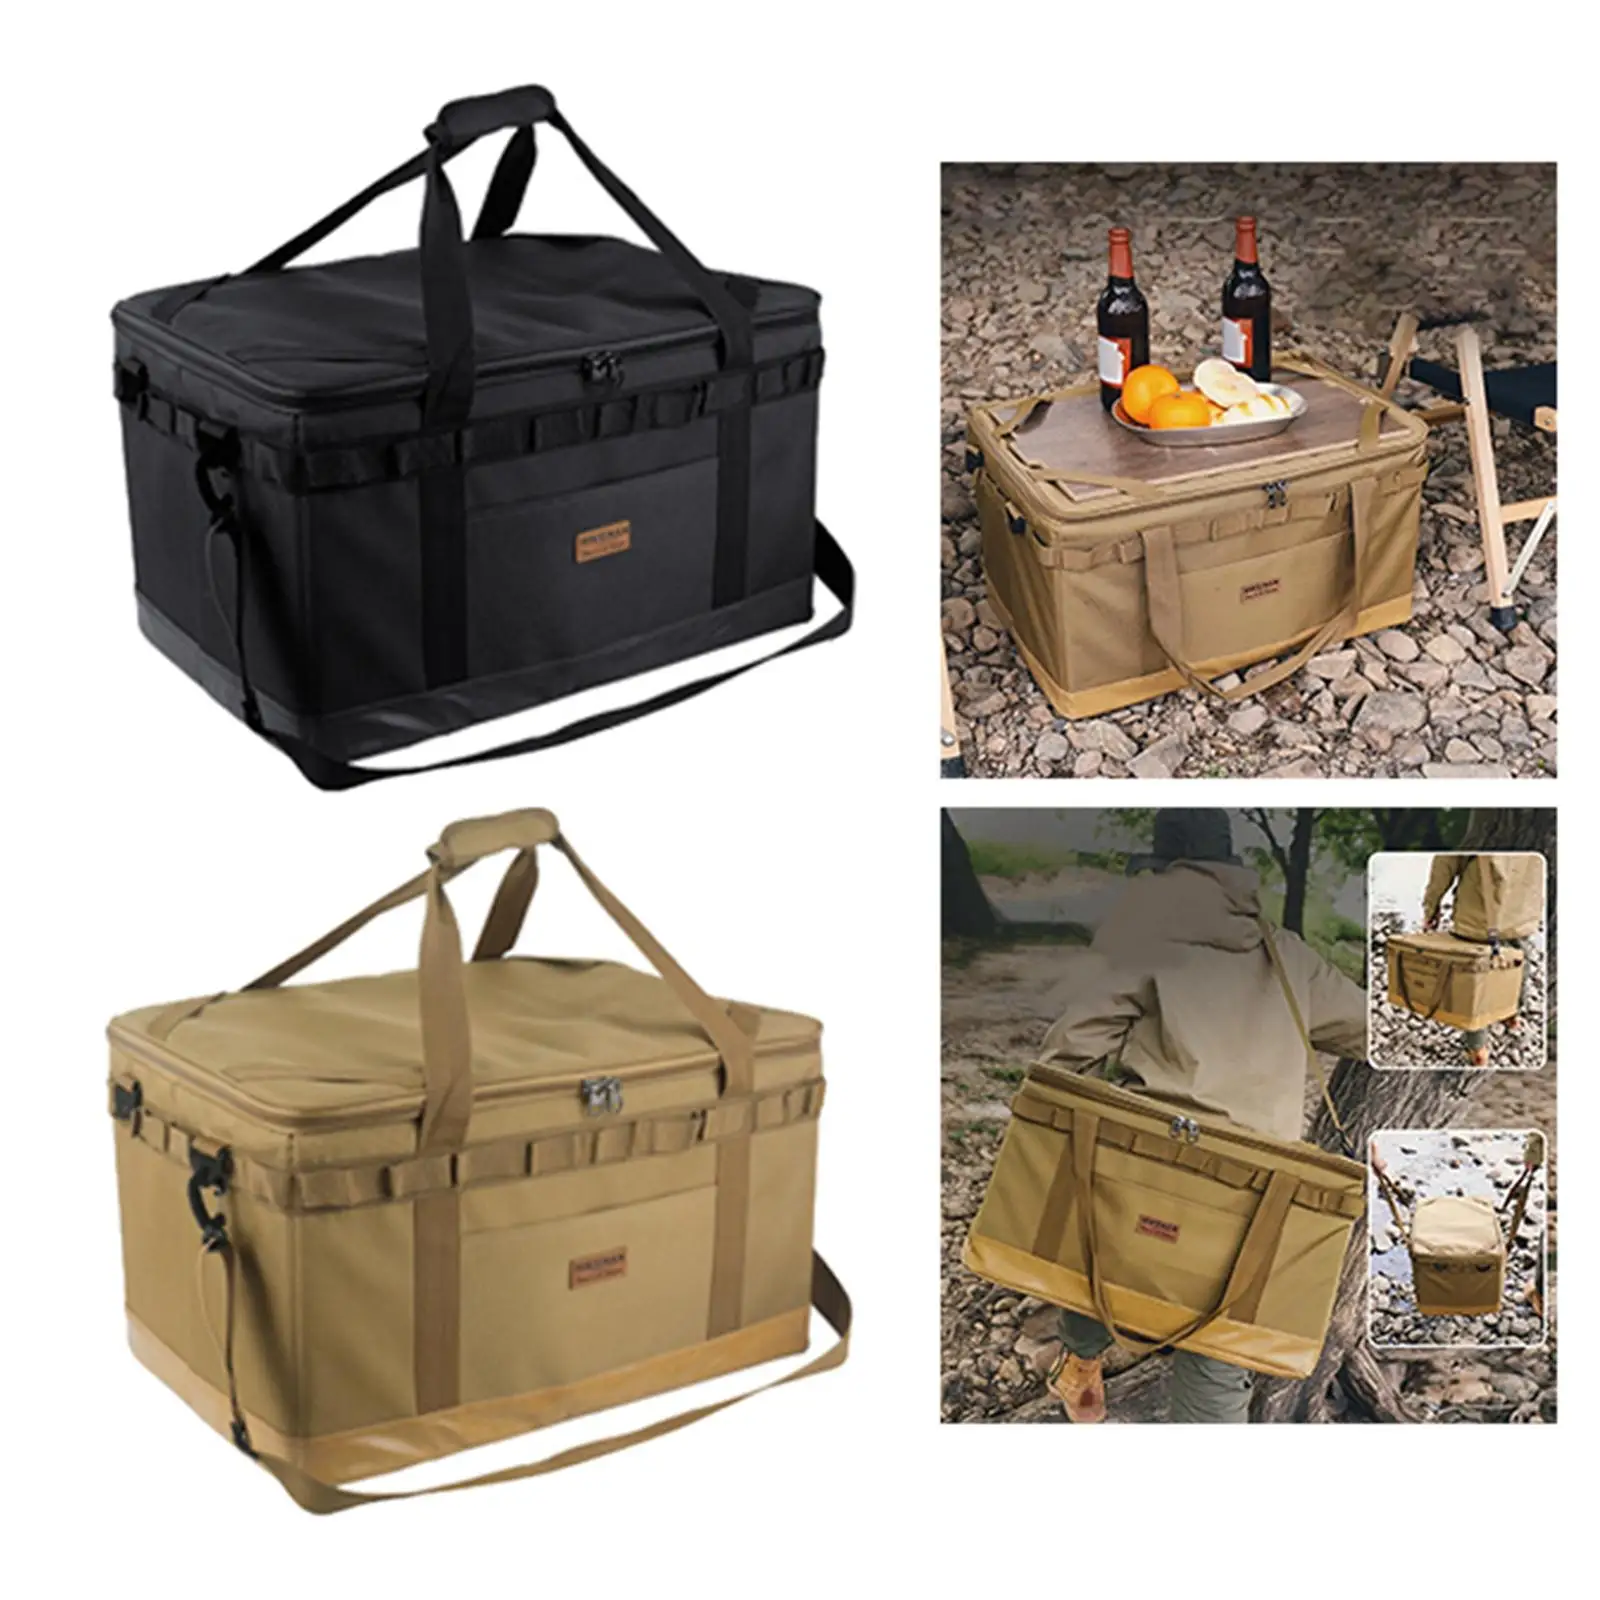 57L Large Capacity Outdoor Camping Gear Bag Duffel Bag Hard Storage Box